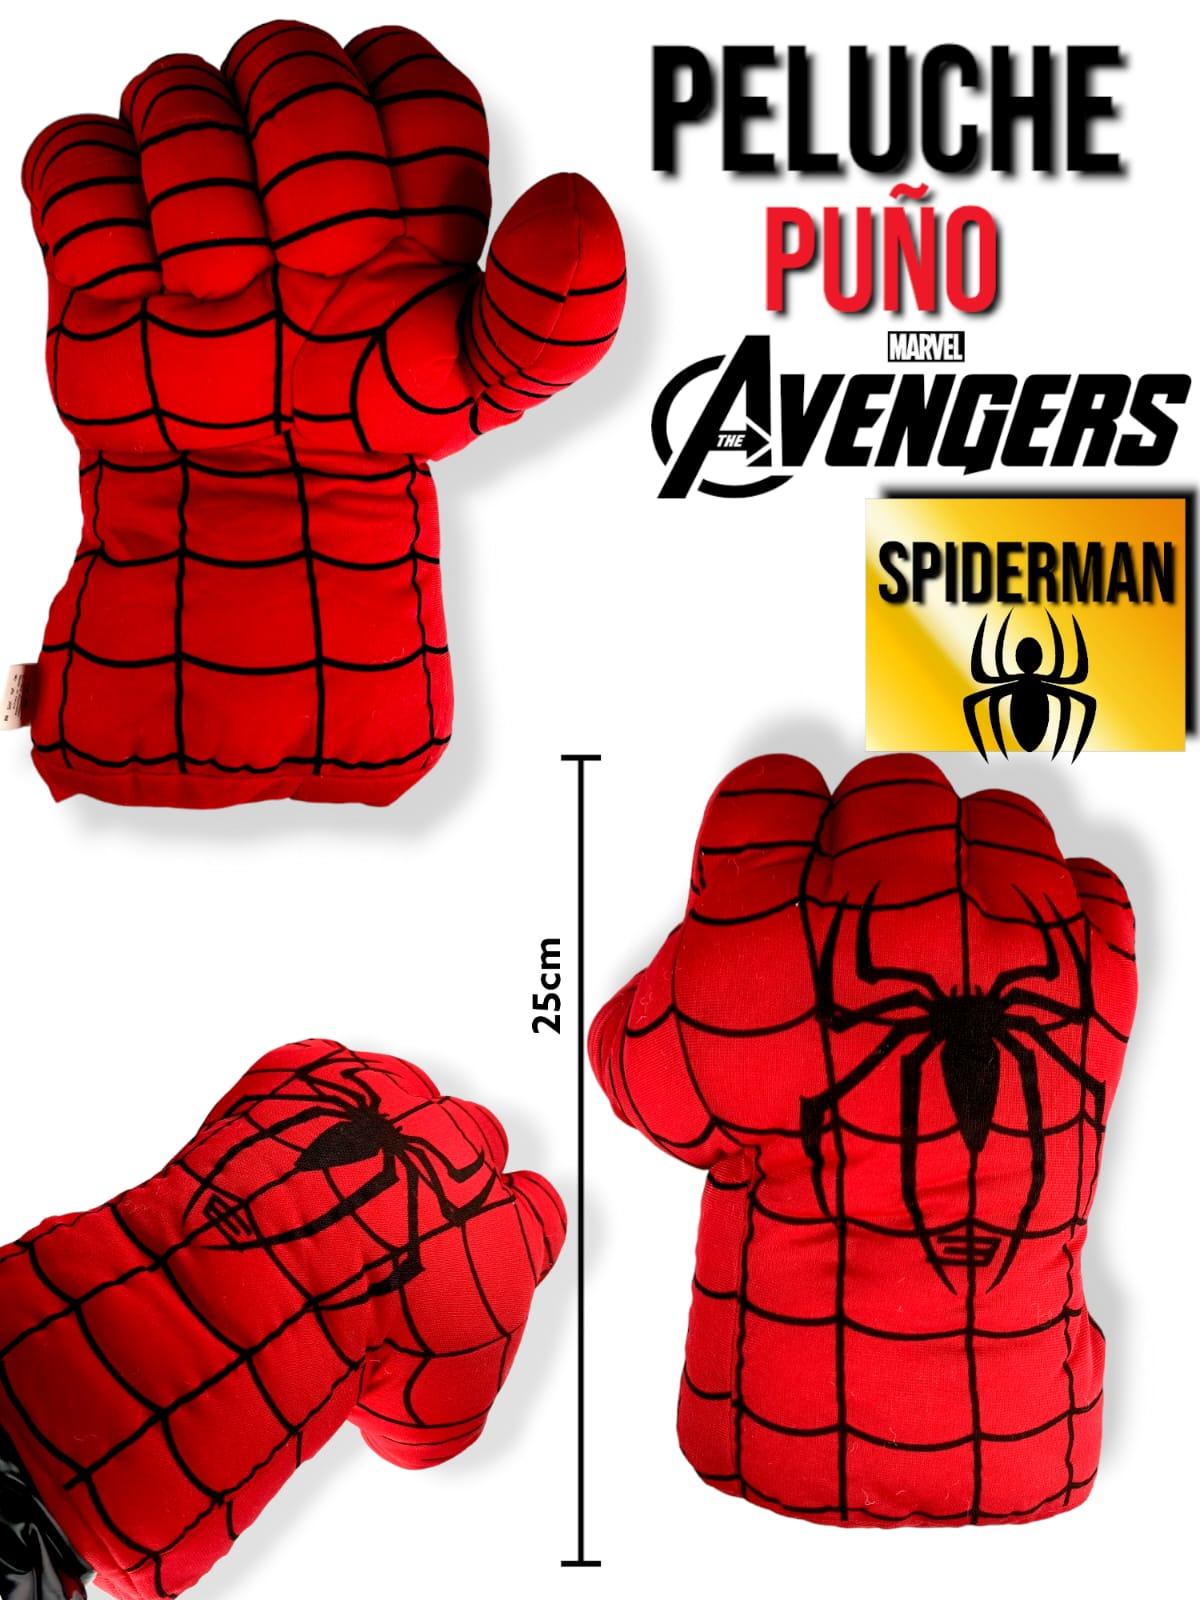 Peluche Puño AVENGERS Spiderman